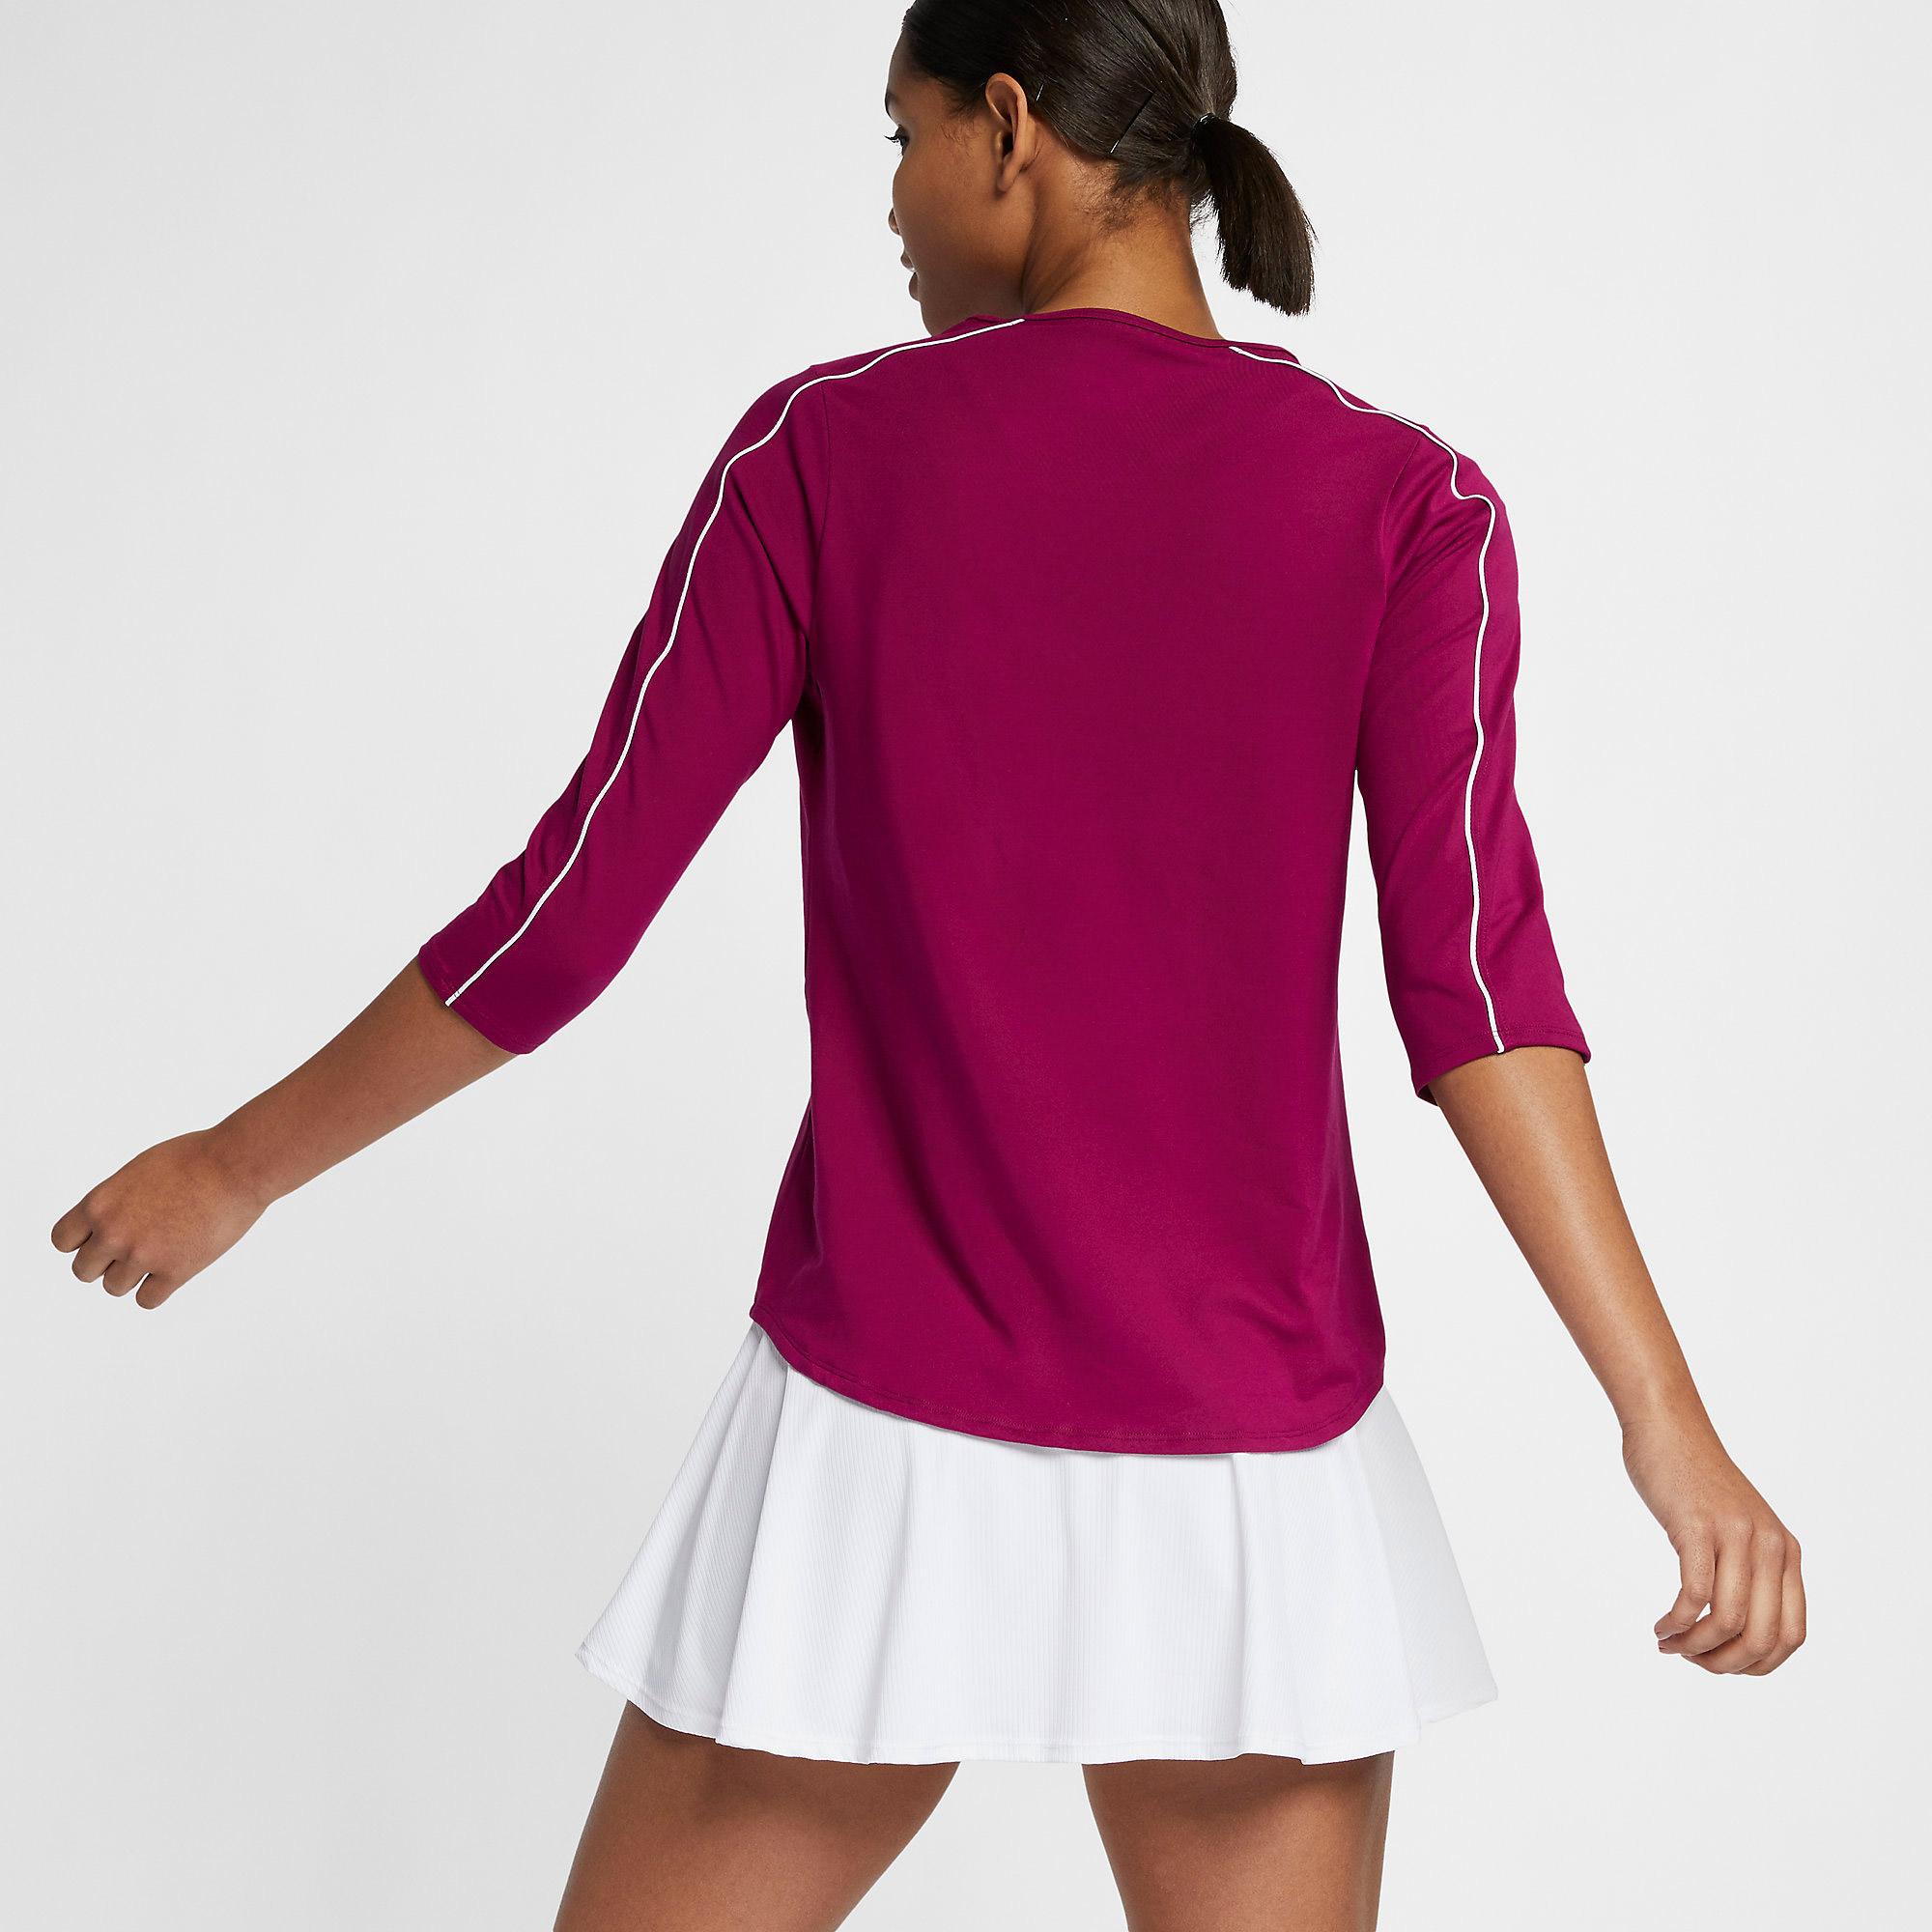 Nike Womens 3/4 Sleeve Tennis Top - True Berry/White - Tennisnuts.com